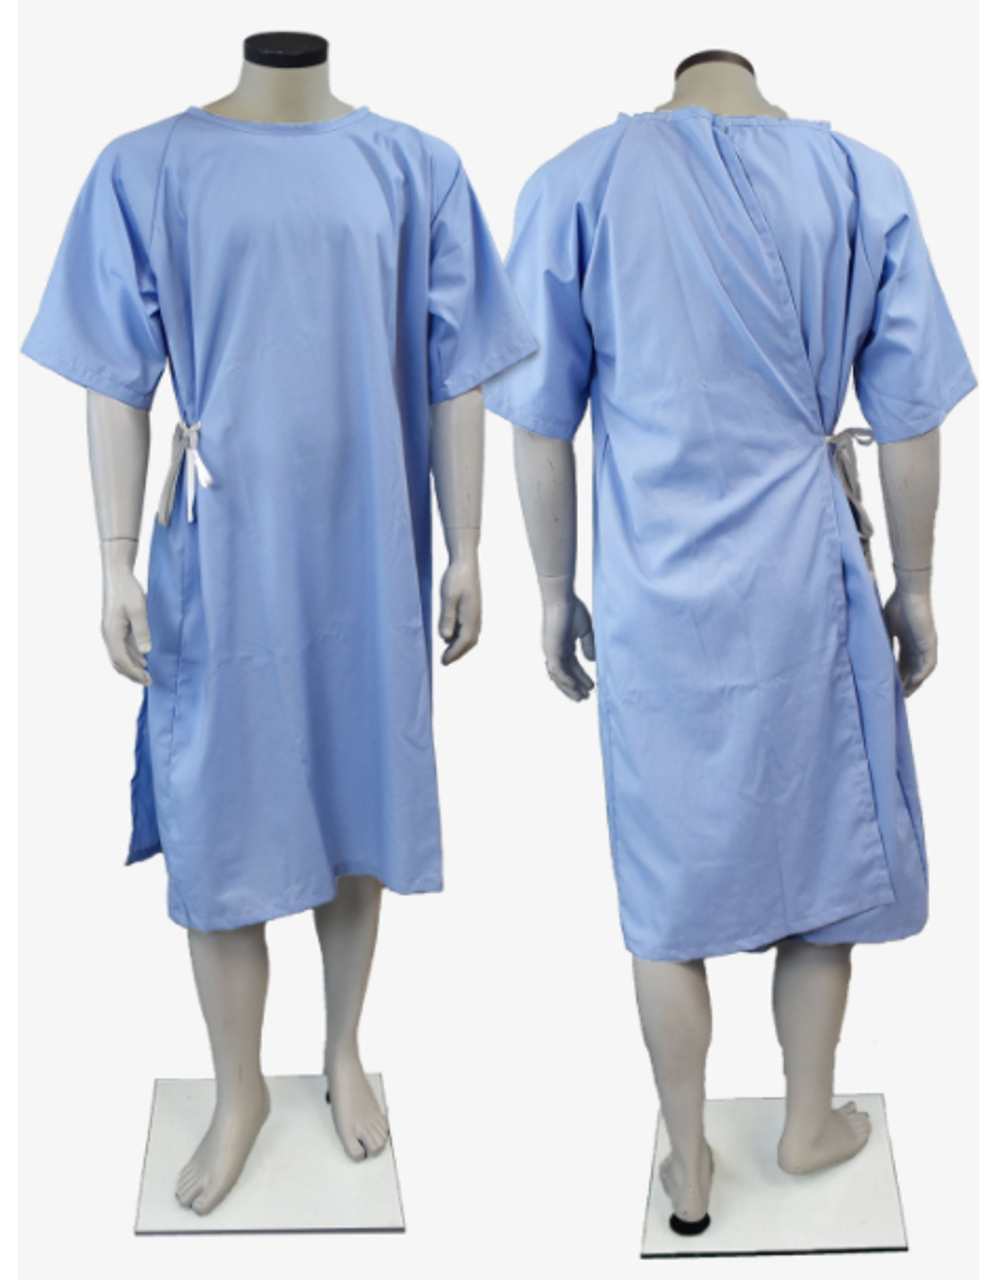 BioSmart™ Examination Gown, 4oz, One Size, Ceil Blue, Style 7300-BSR42, Each